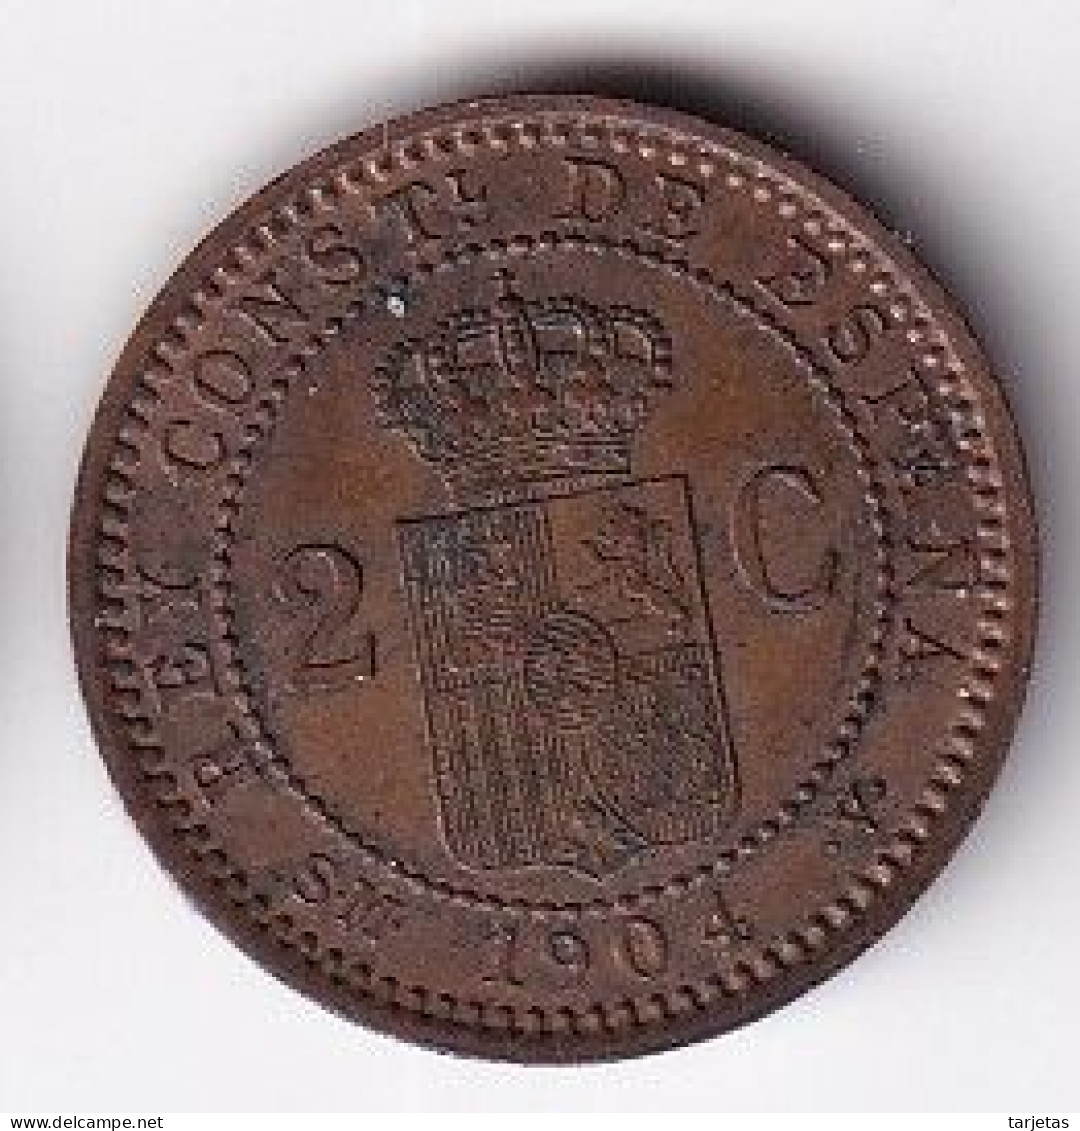 MONEDA DE ESPAÑA DE 2 CENTIMOS DEL AÑO 1904 (COIN) ALFONSO XIII - First Minting